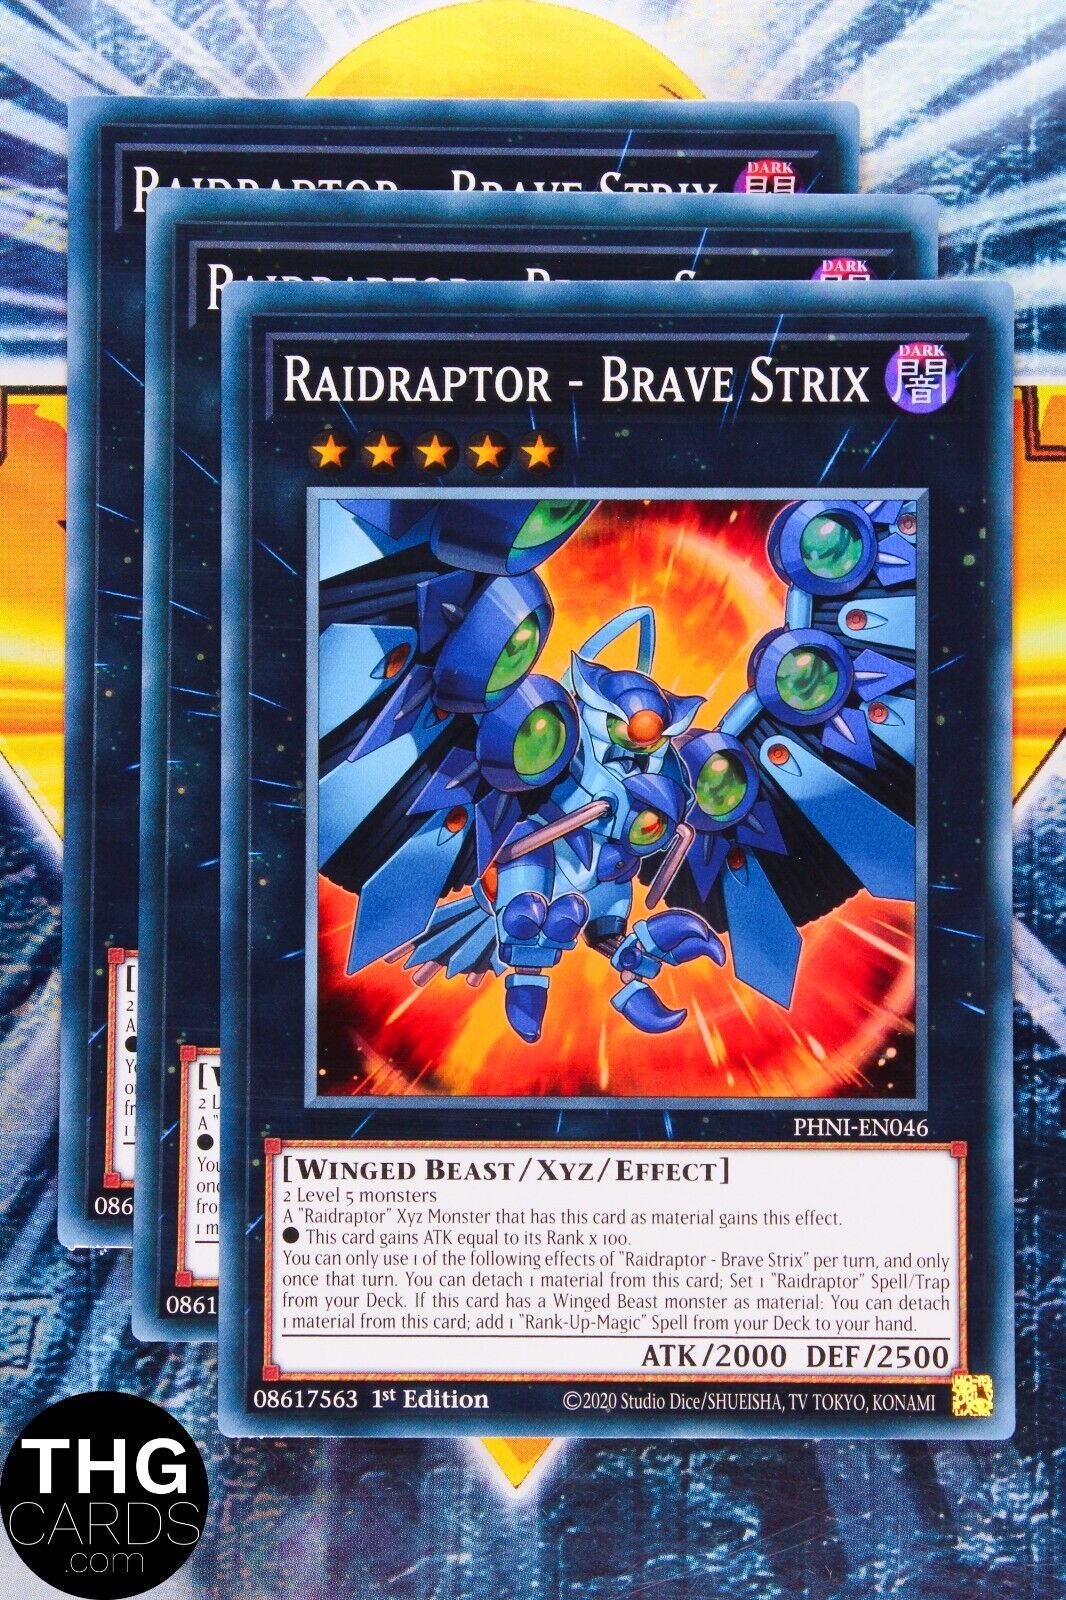 Raidraptor - Brave Strix PHNI-EN046 1st Edition Super Rare Yugioh Playset